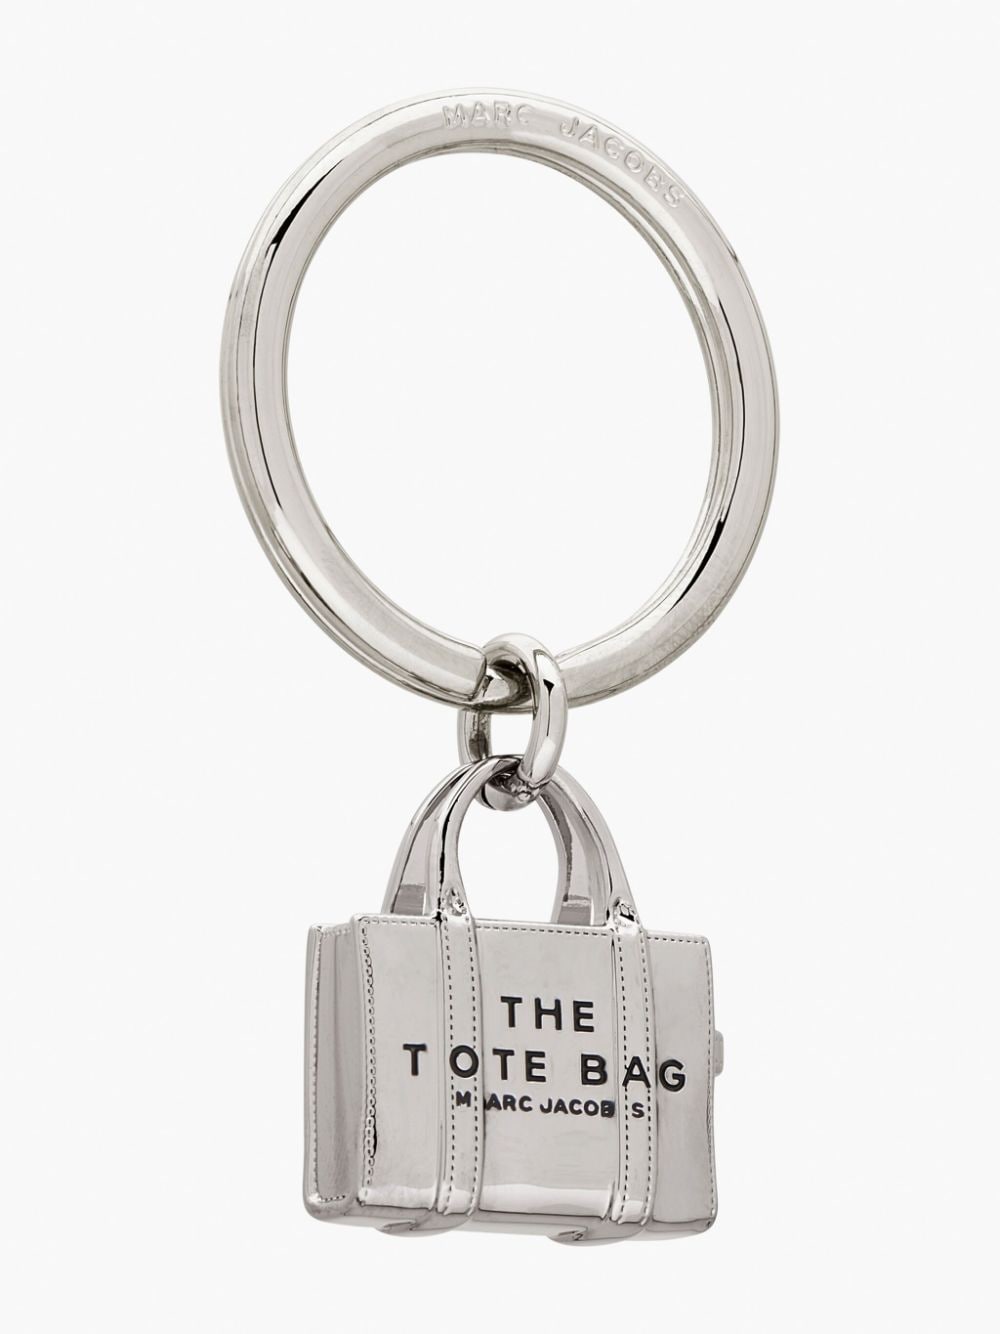 The Tote bag keyring